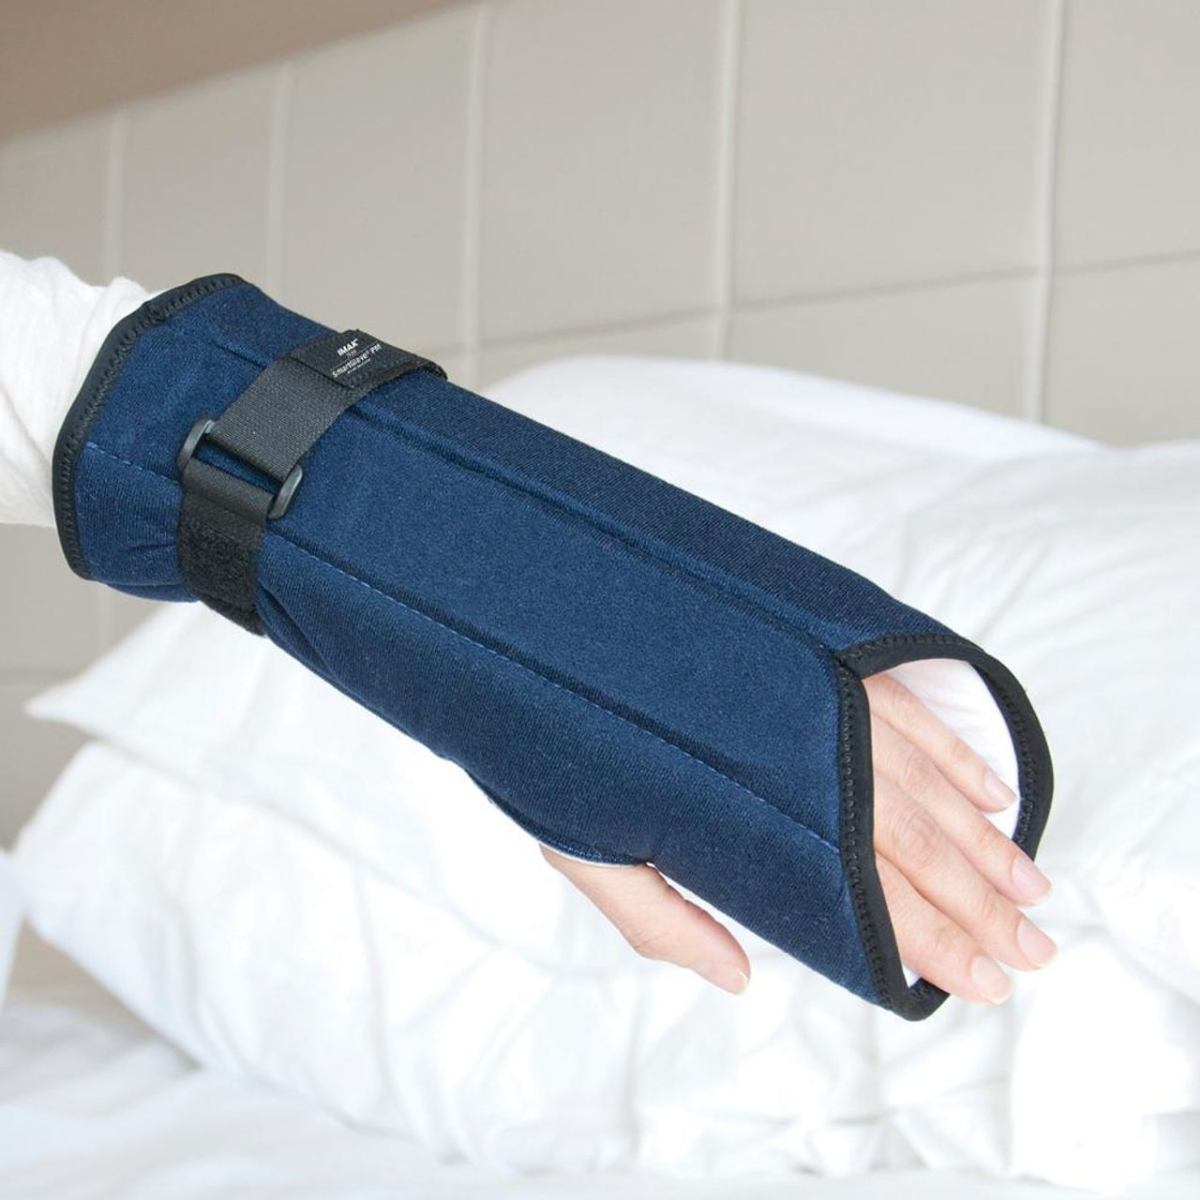 IMAK® RSI PM SmartGlove wrist brace